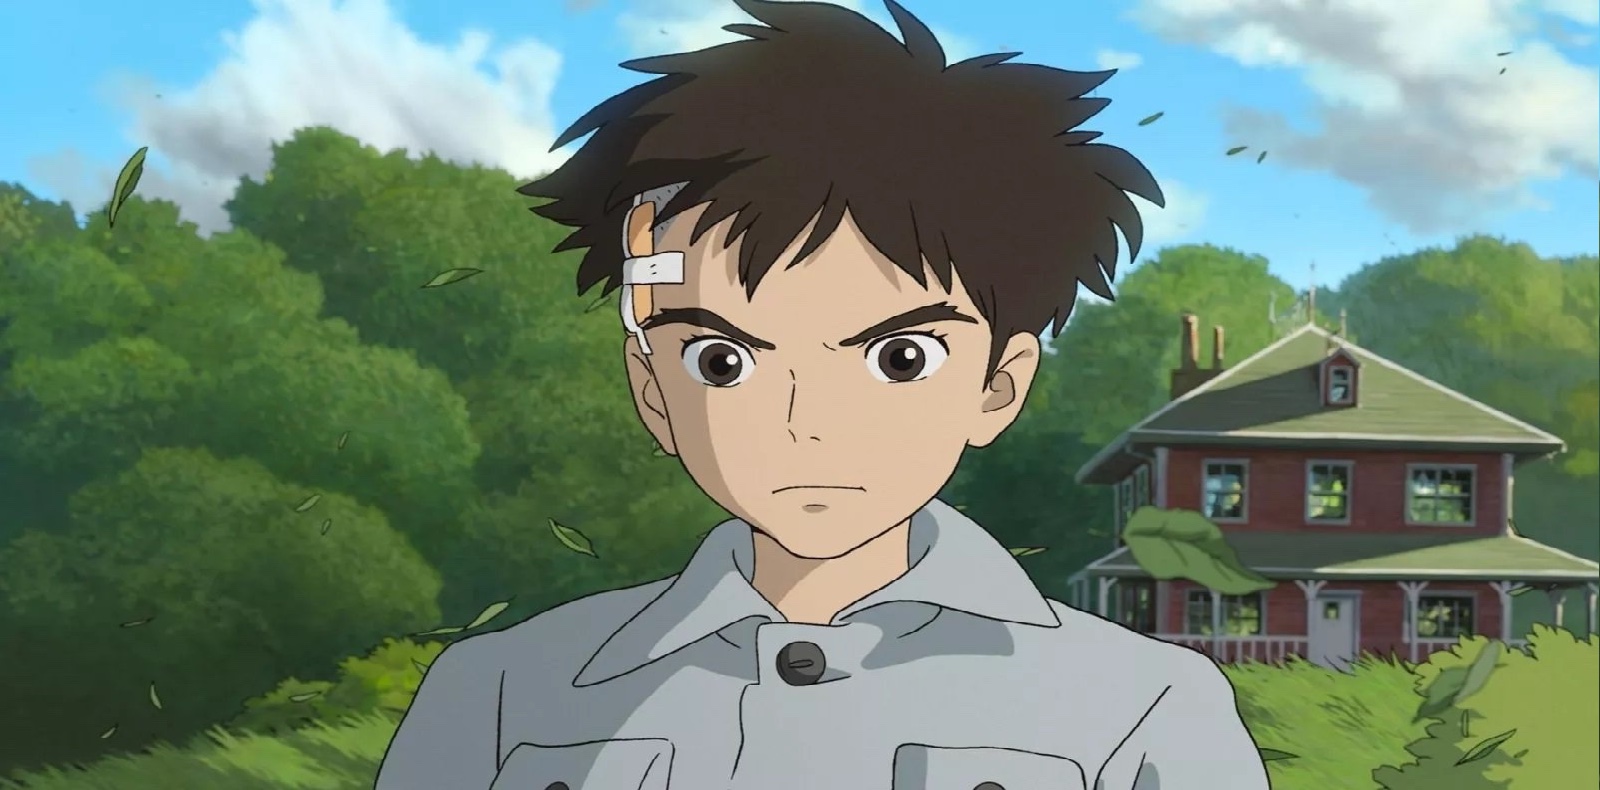 Hayao Miyazaki,The Boy and the Heron, Studio Ghibli